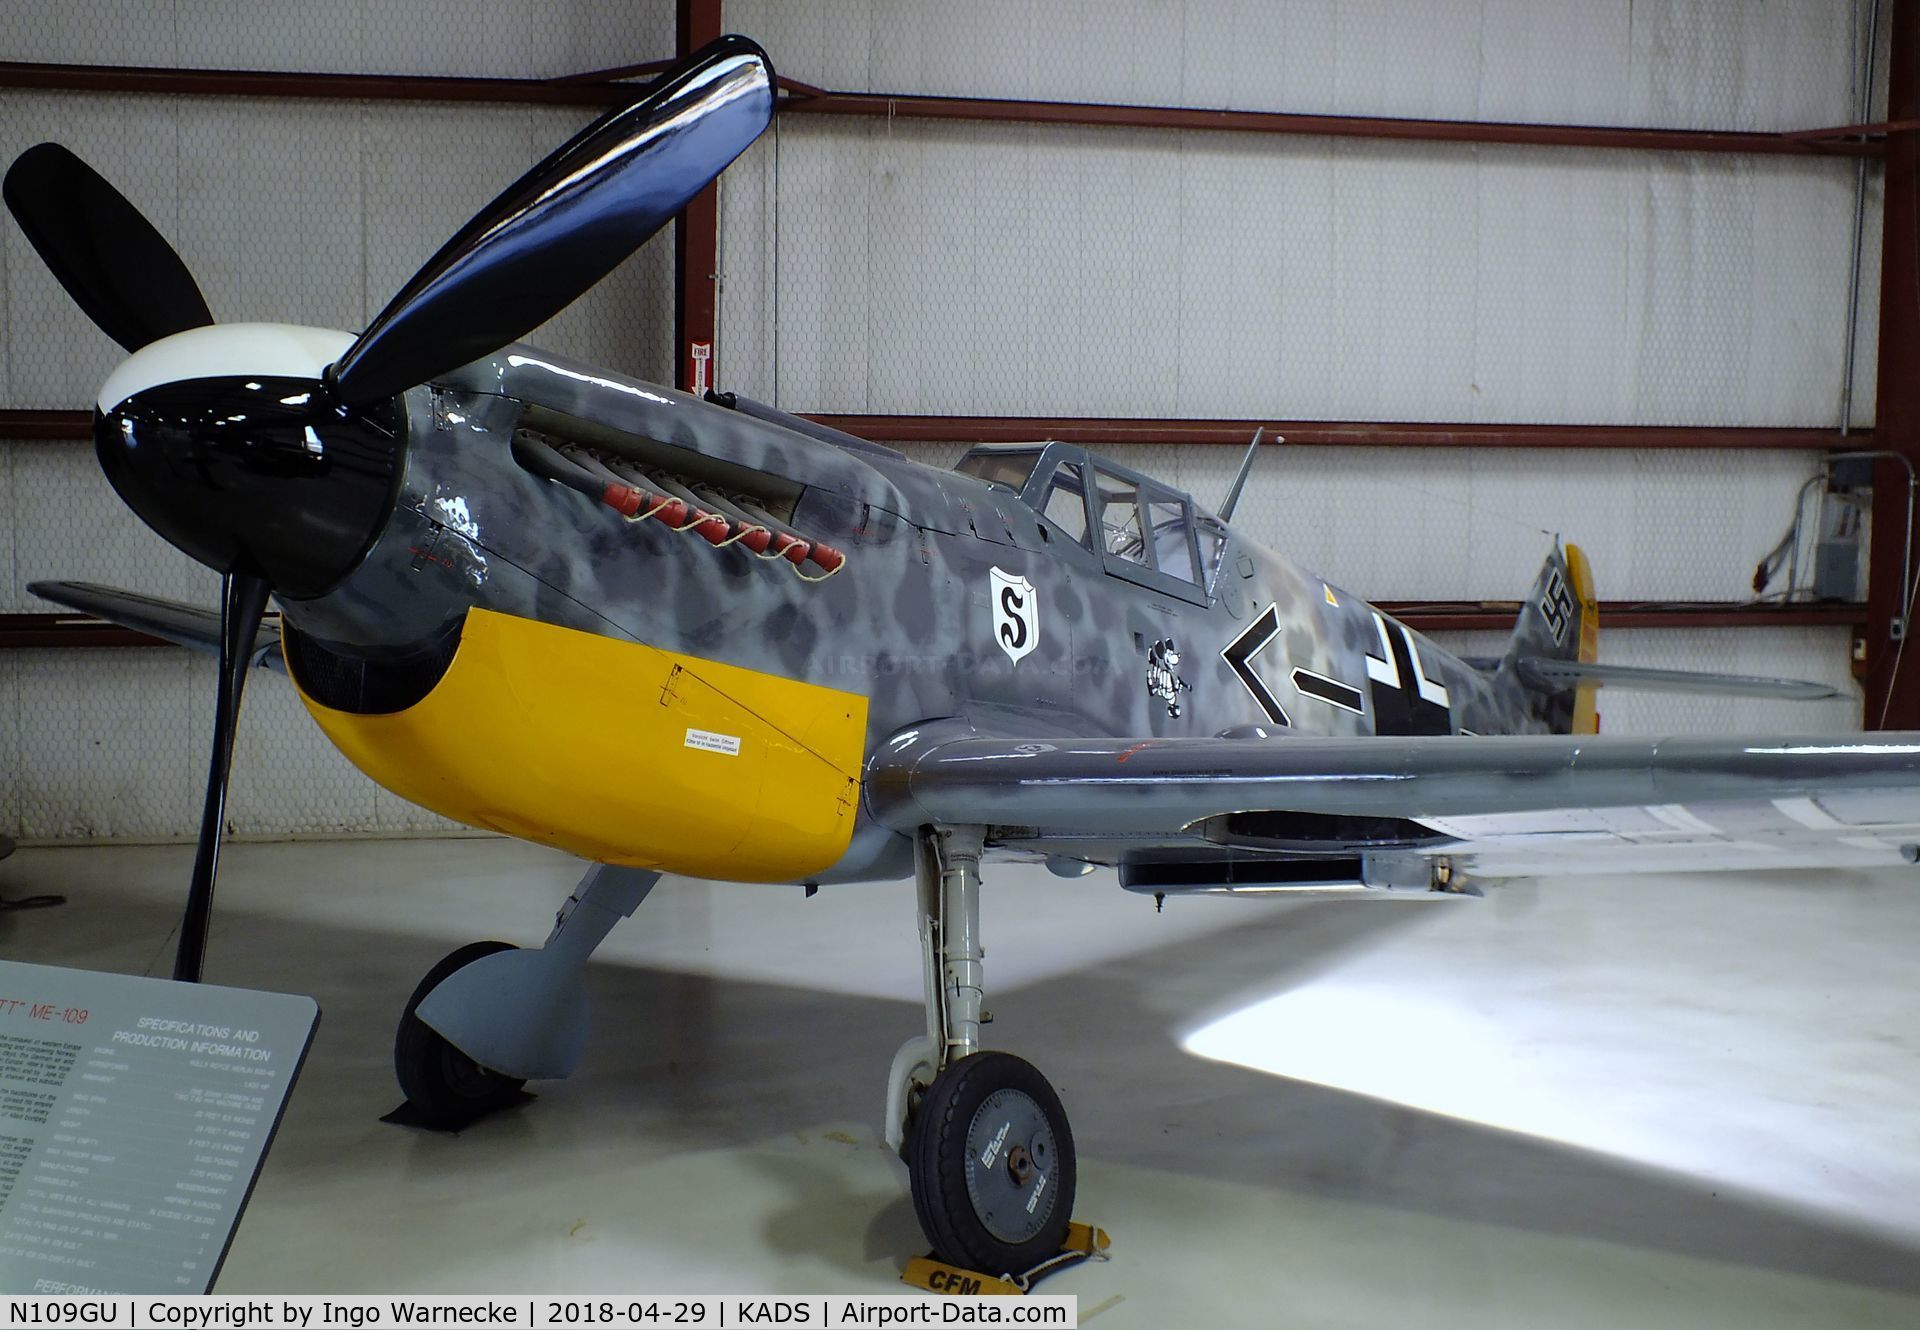 N109GU, 1958 Hispano HA-1112-M1L Buchon C/N 235, Hispano HA-1112-M1L Buchon (posing as a Bf 109) at the Cavanaugh Flight Museum, Addison TX